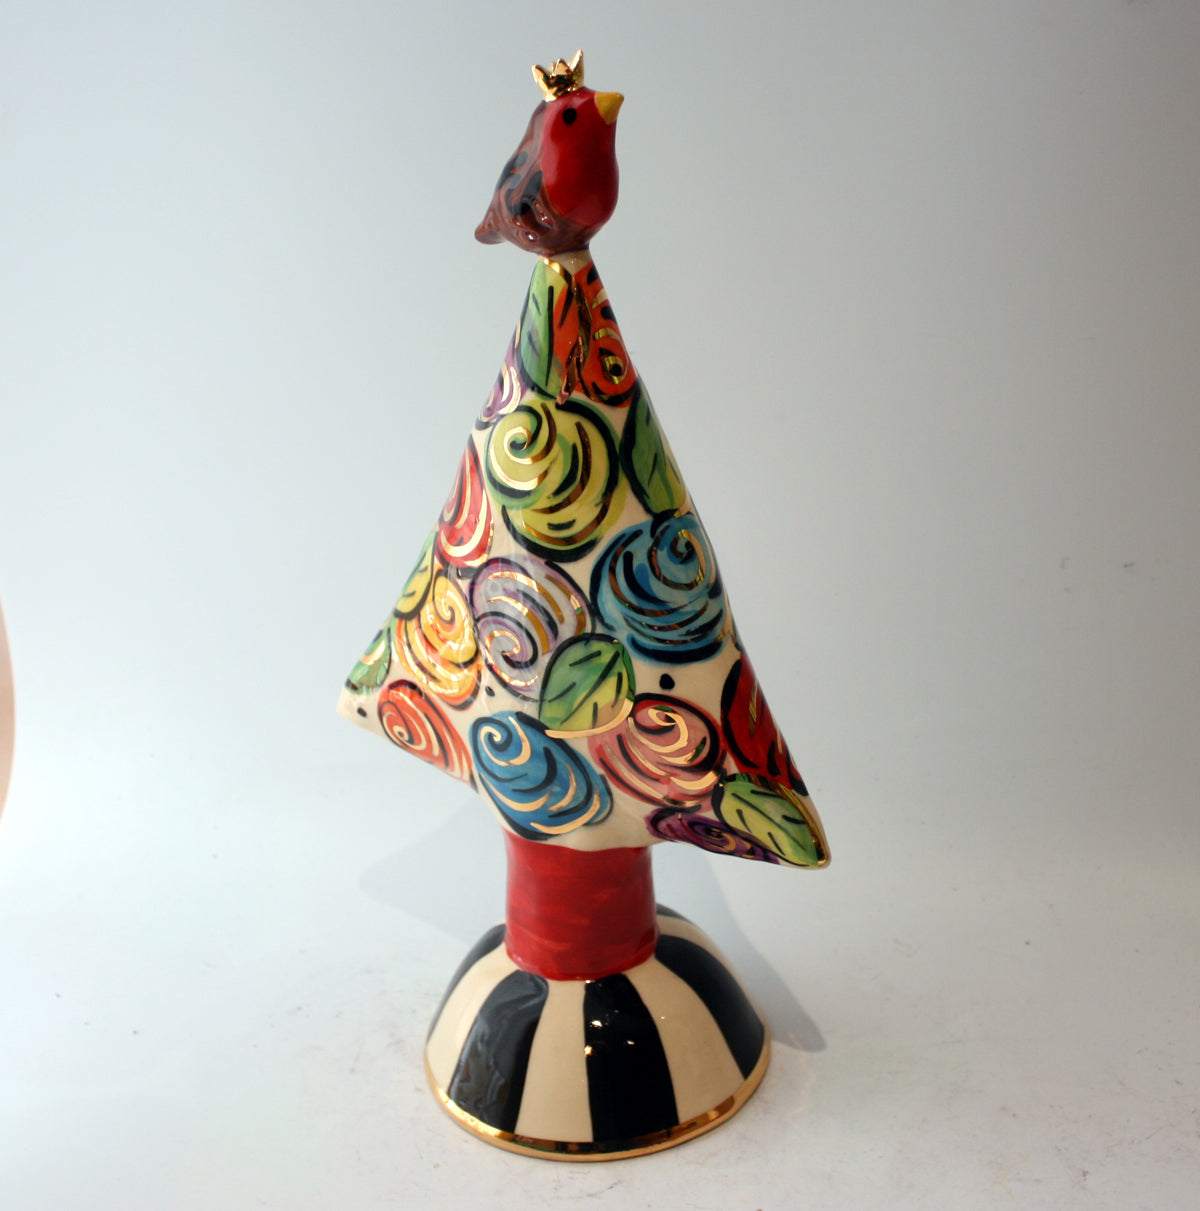 Medium Christmas Tree with Robin - MaryRoseYoung